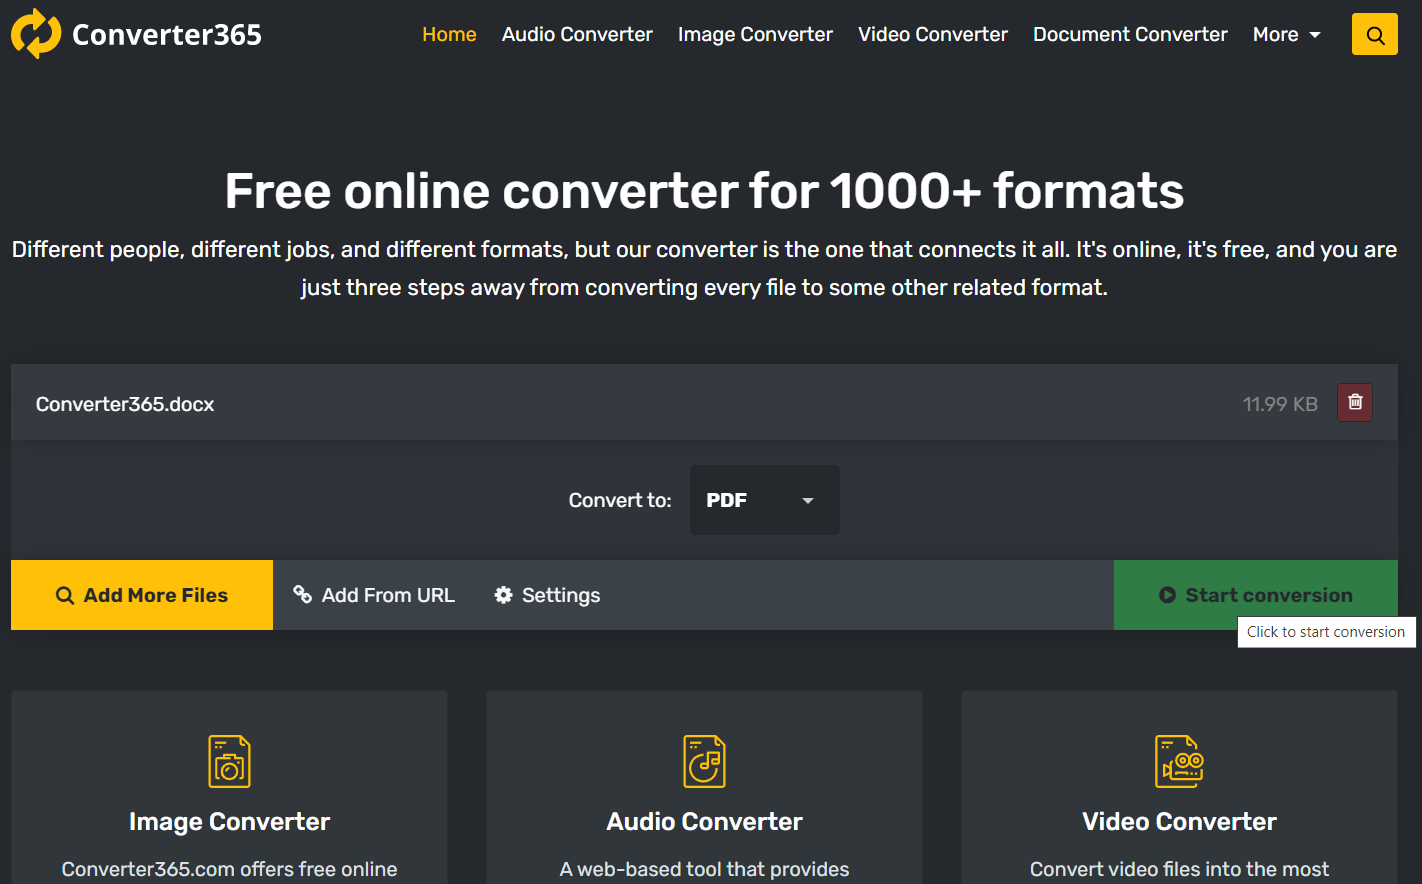 Online Converter - Convert Video, Audio, Image, PDF